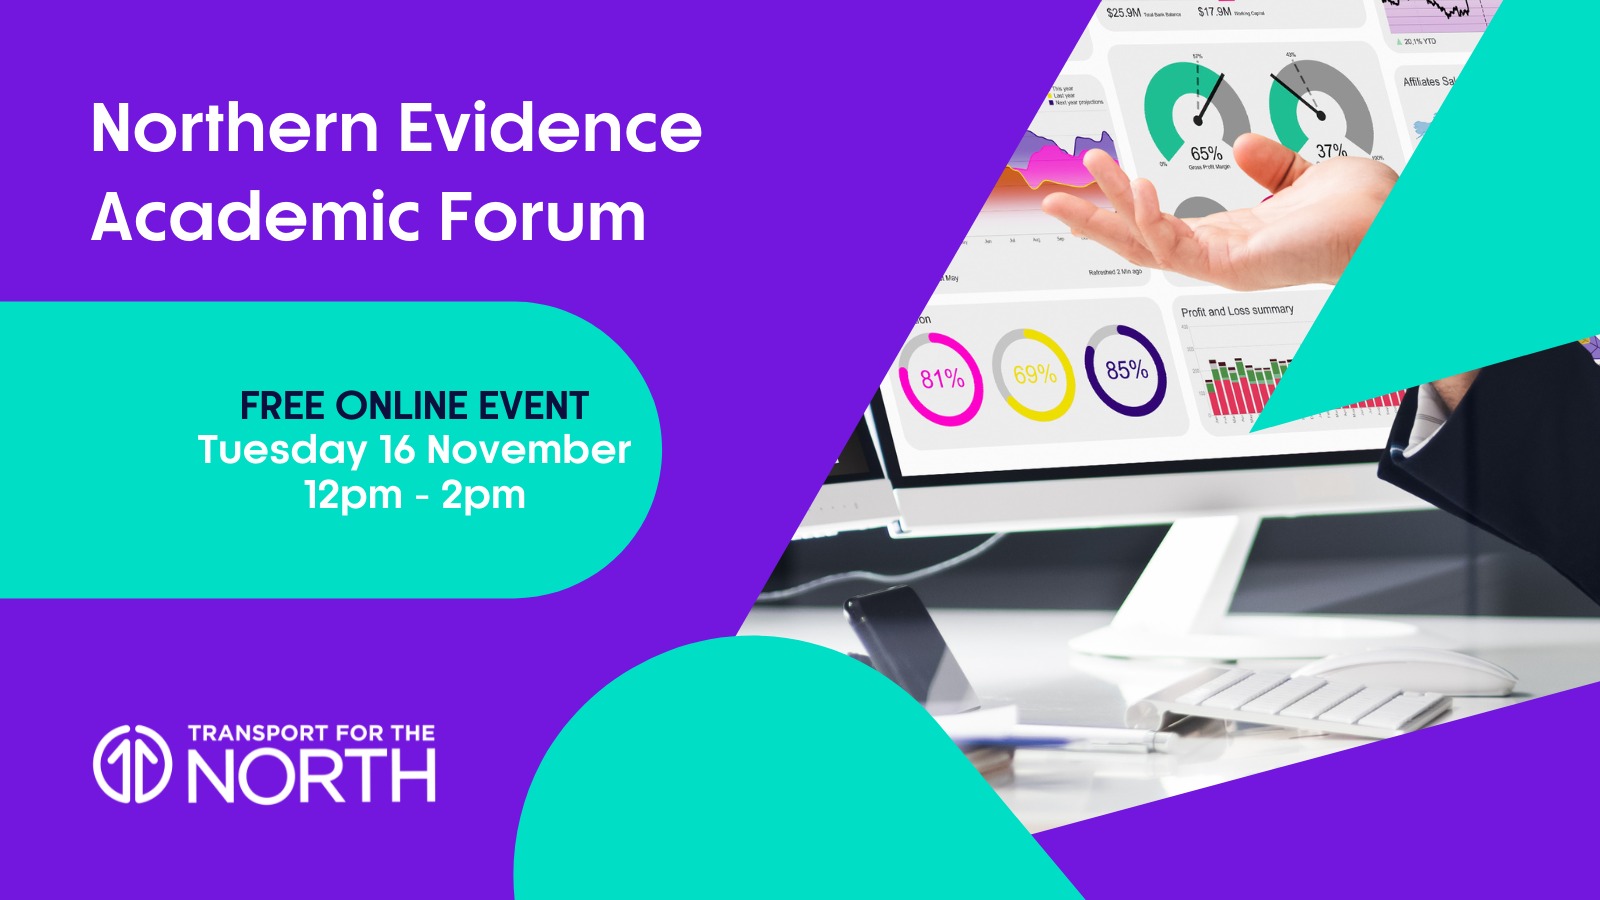 Northern Evidence Academic Forum November 16